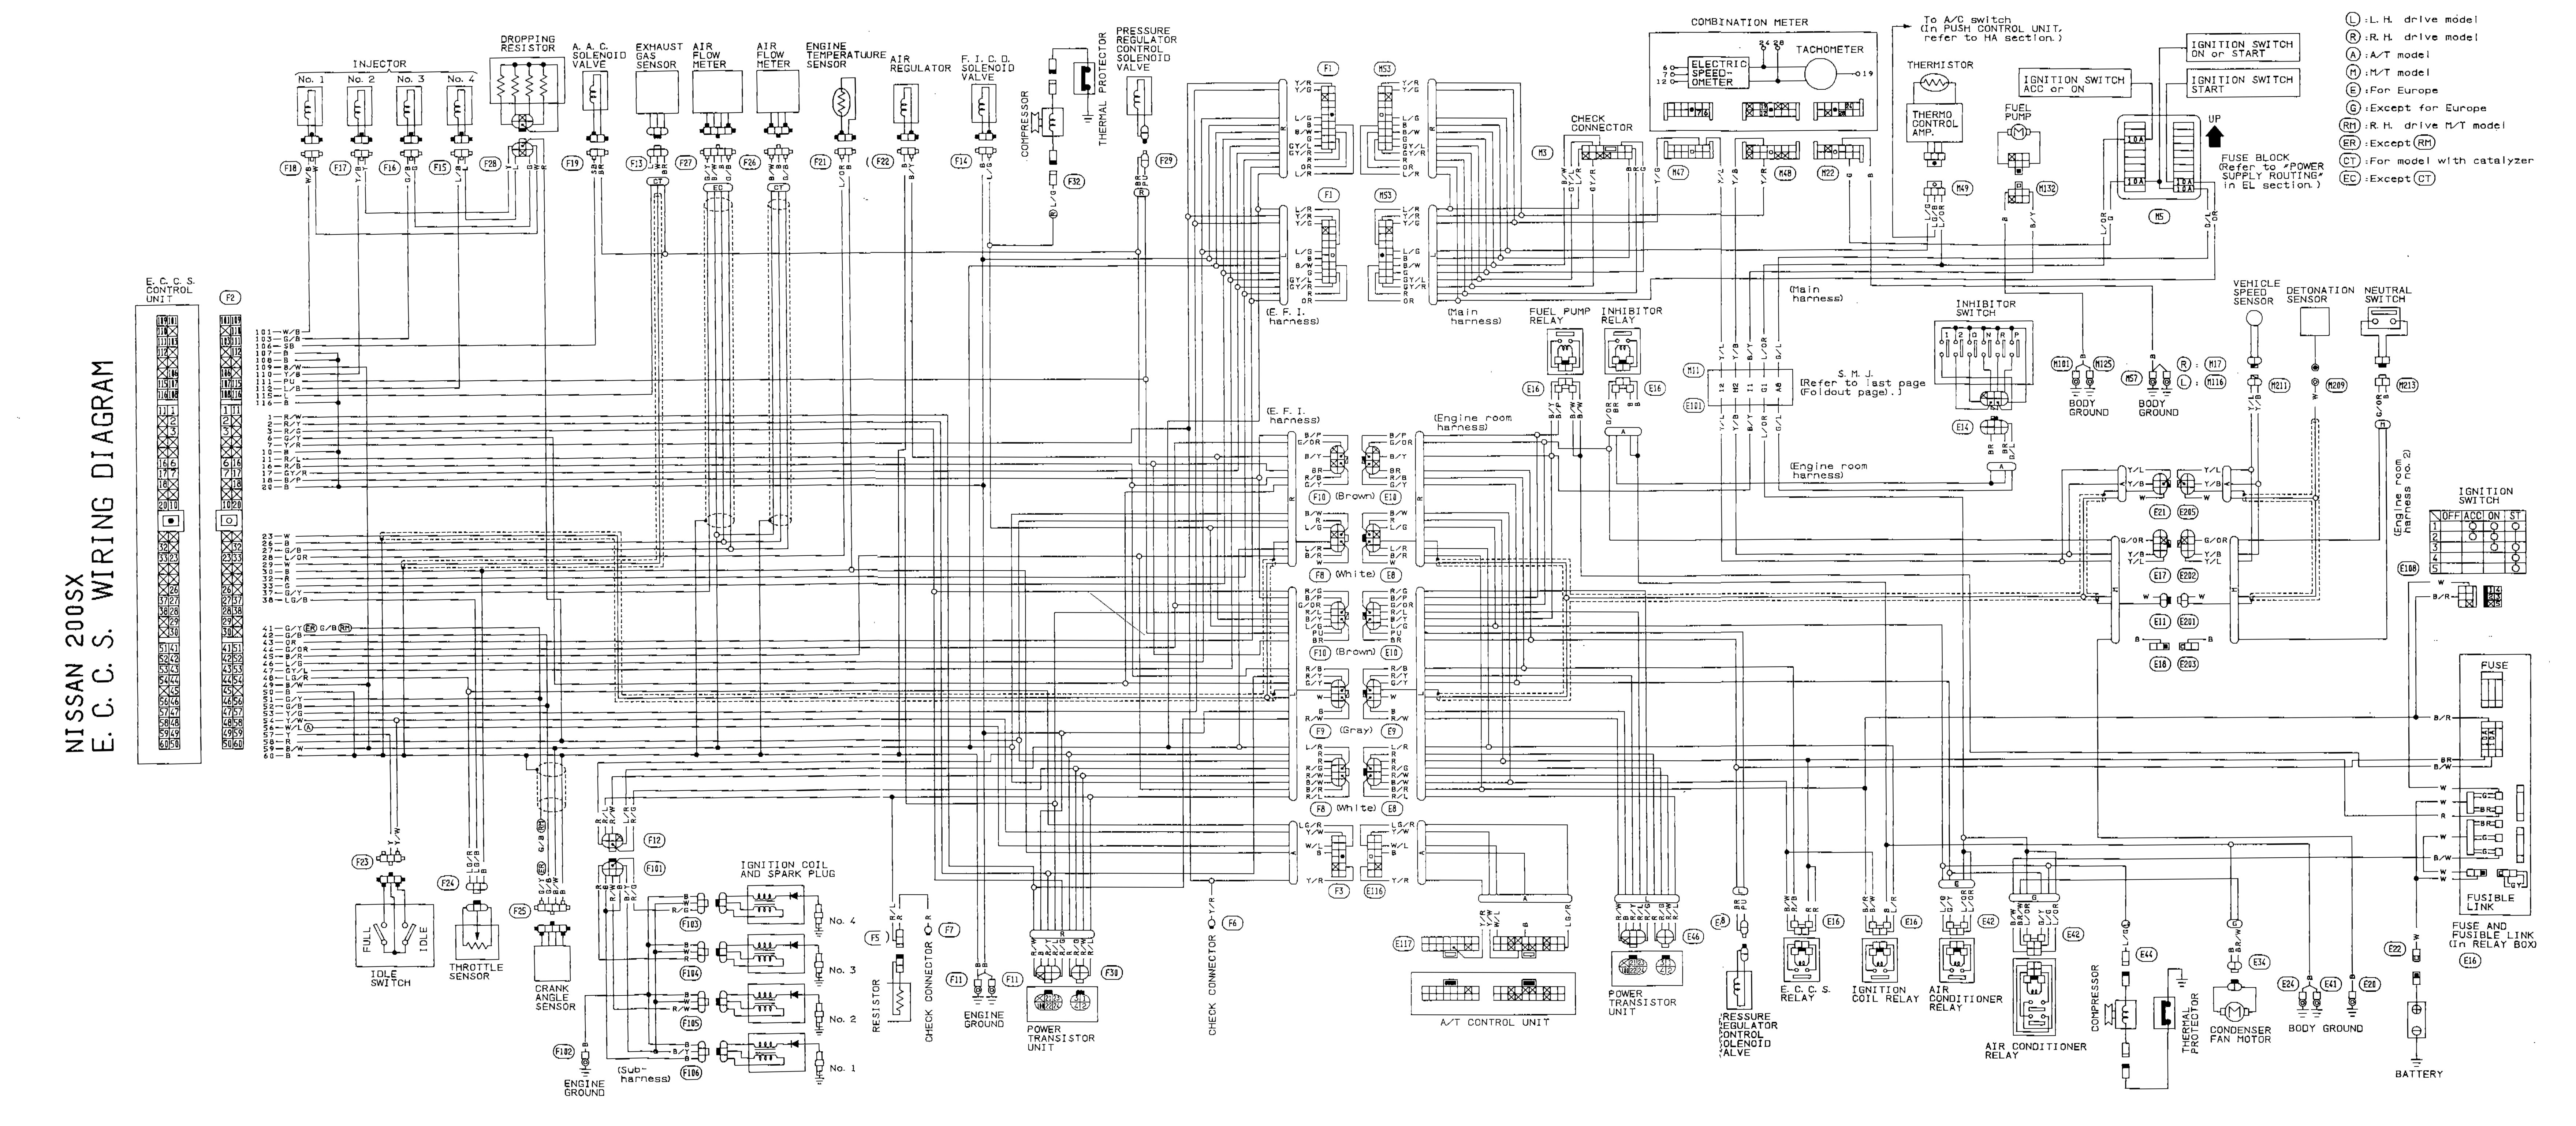 Sr20det Engine Diagram Eccs Sr20det Nissan Wiring Diagram 2013 Automotive Wiring Diagrams Of Sr20det Engine Diagram